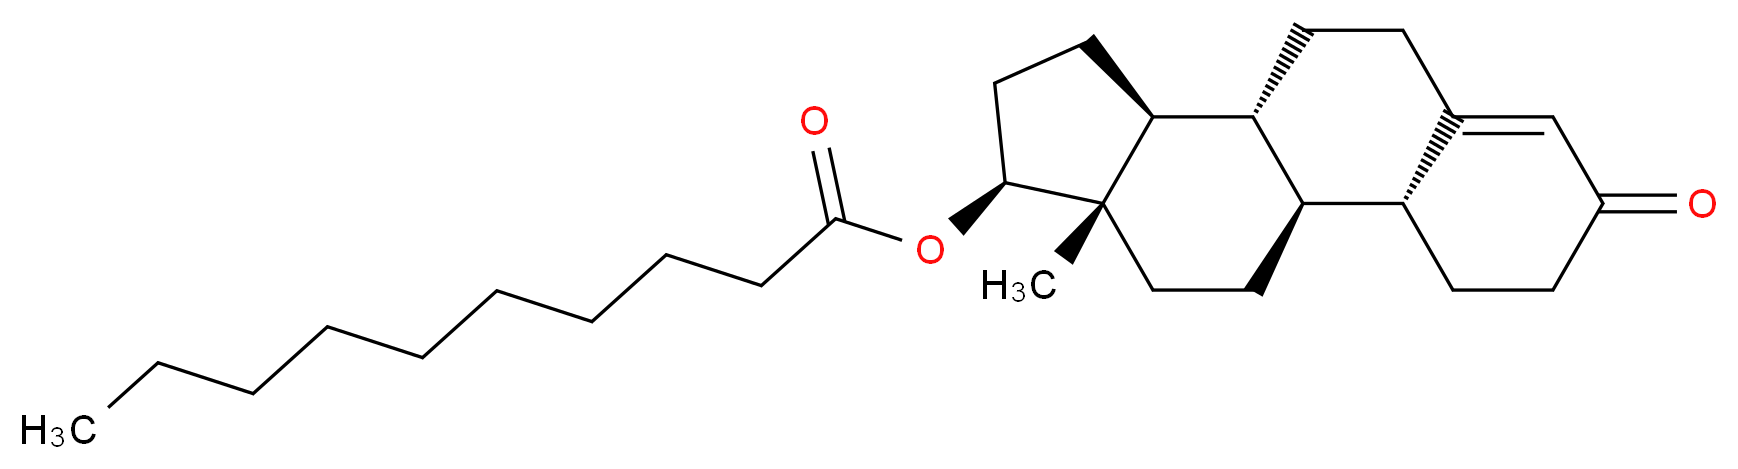 Nandrolone decanoate_Molecular_structure_CAS_360-70-3)